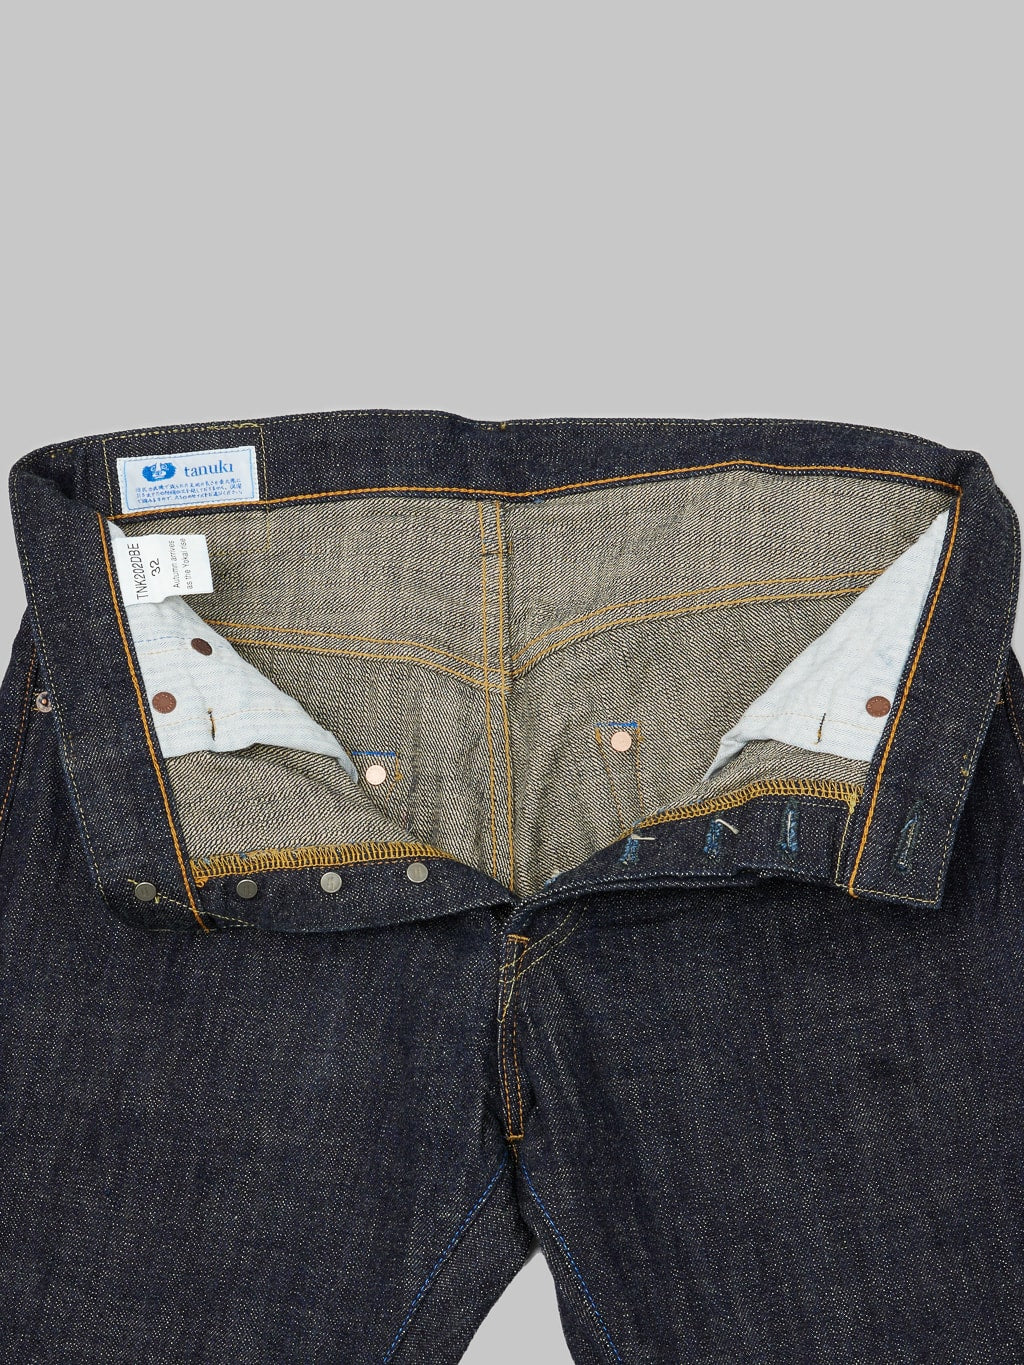 Tanuki Zetto Benkei High Tapered Jeans weft fabric